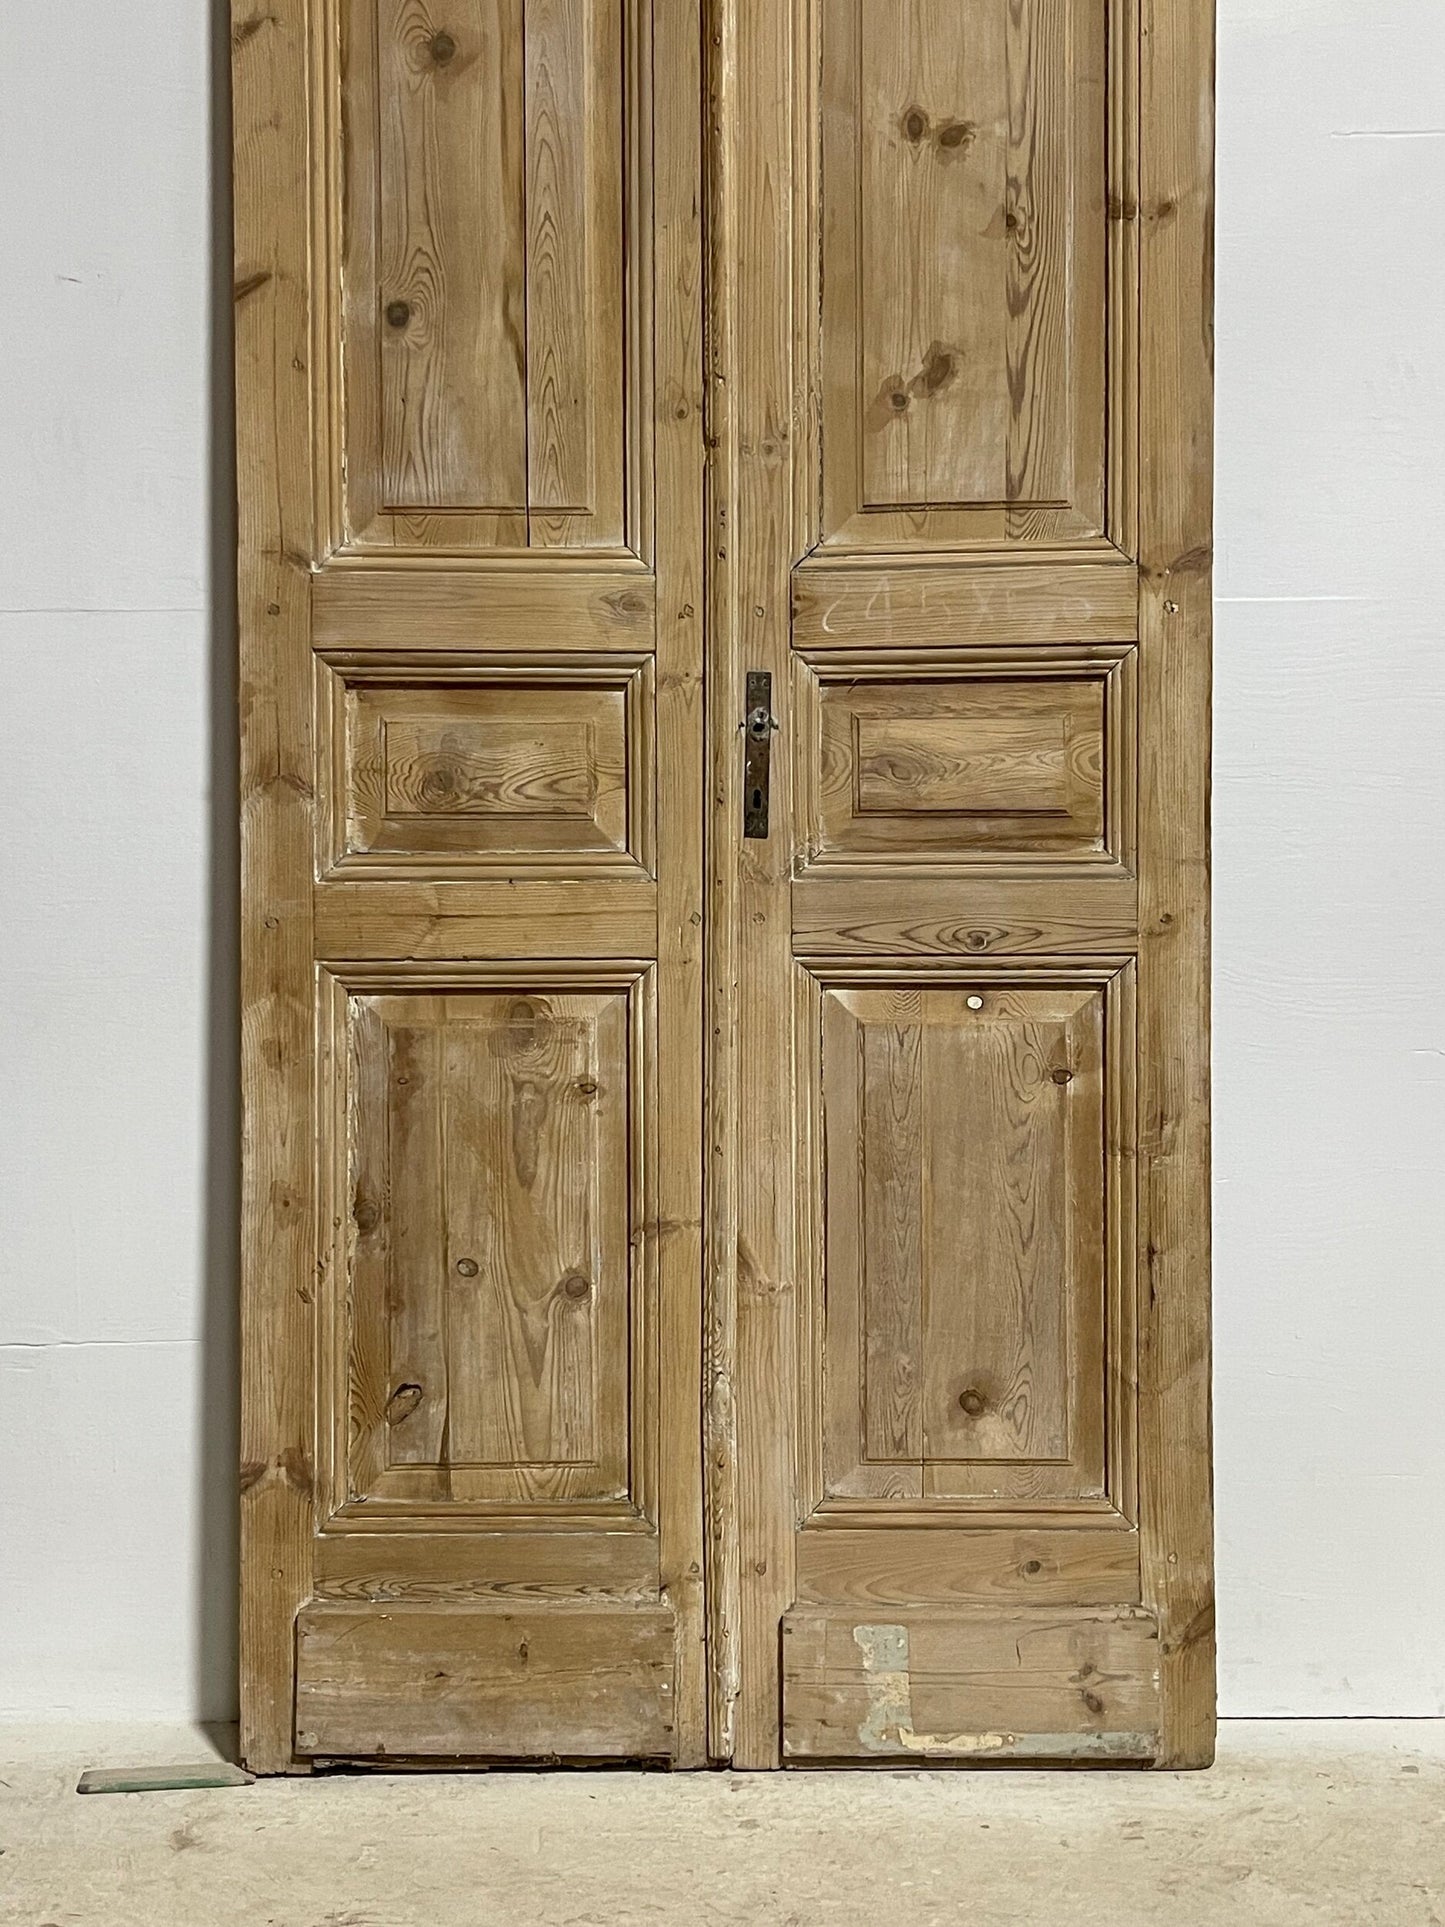 Antique French doors (96x39.75) H0139s